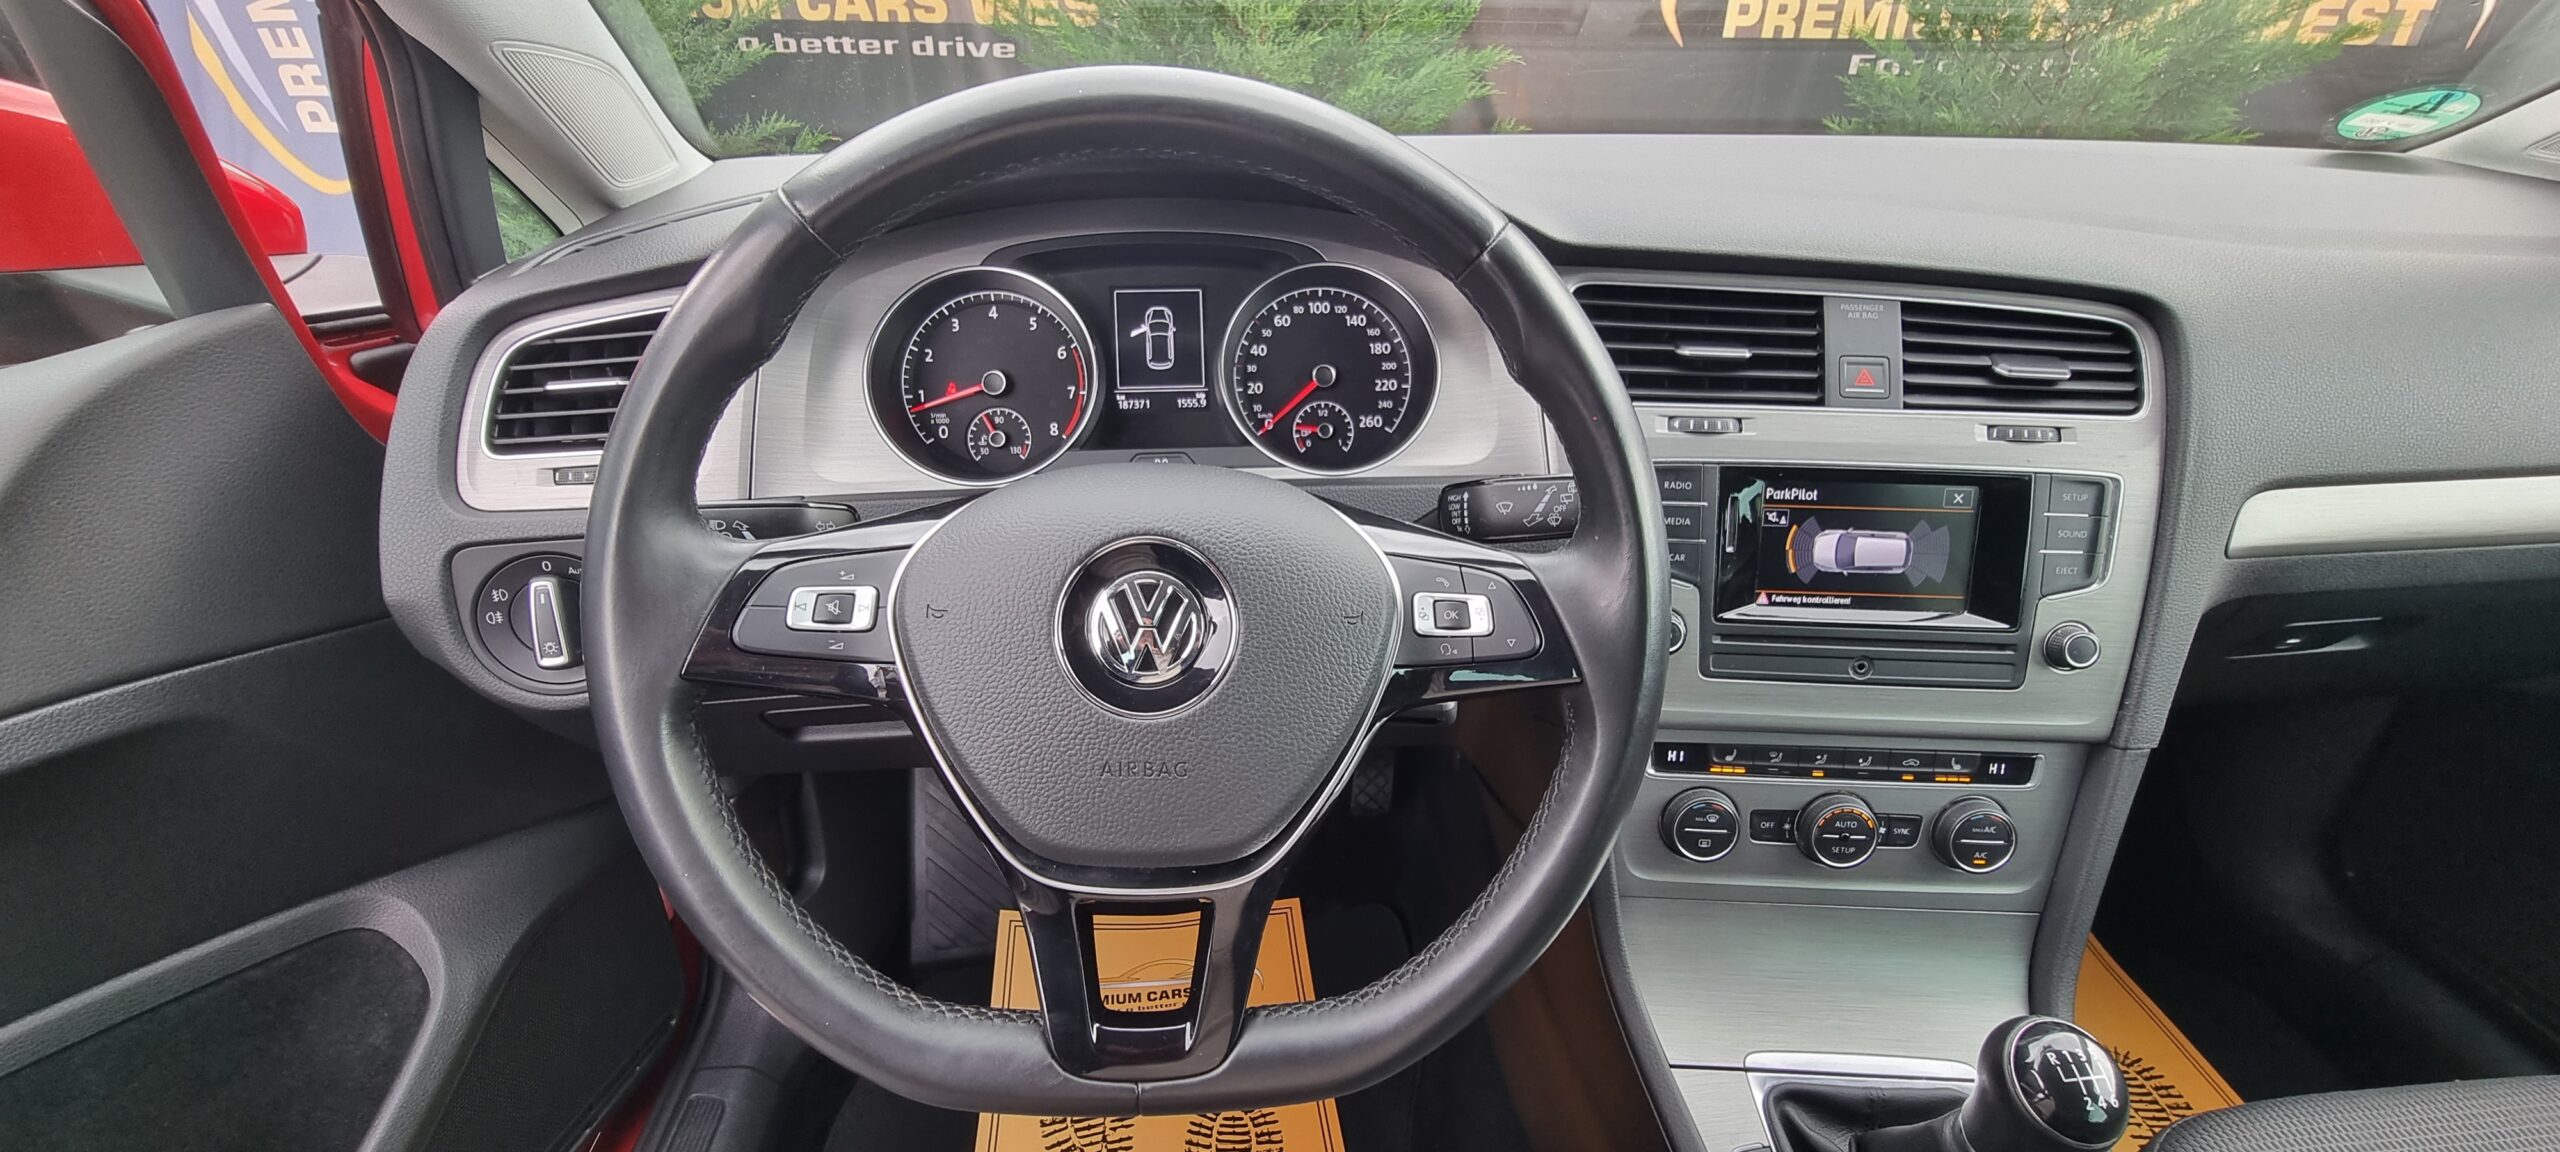 VW GOLF 7, 1.2 BENZINA , 105 CP, EURO 5, AN 2014